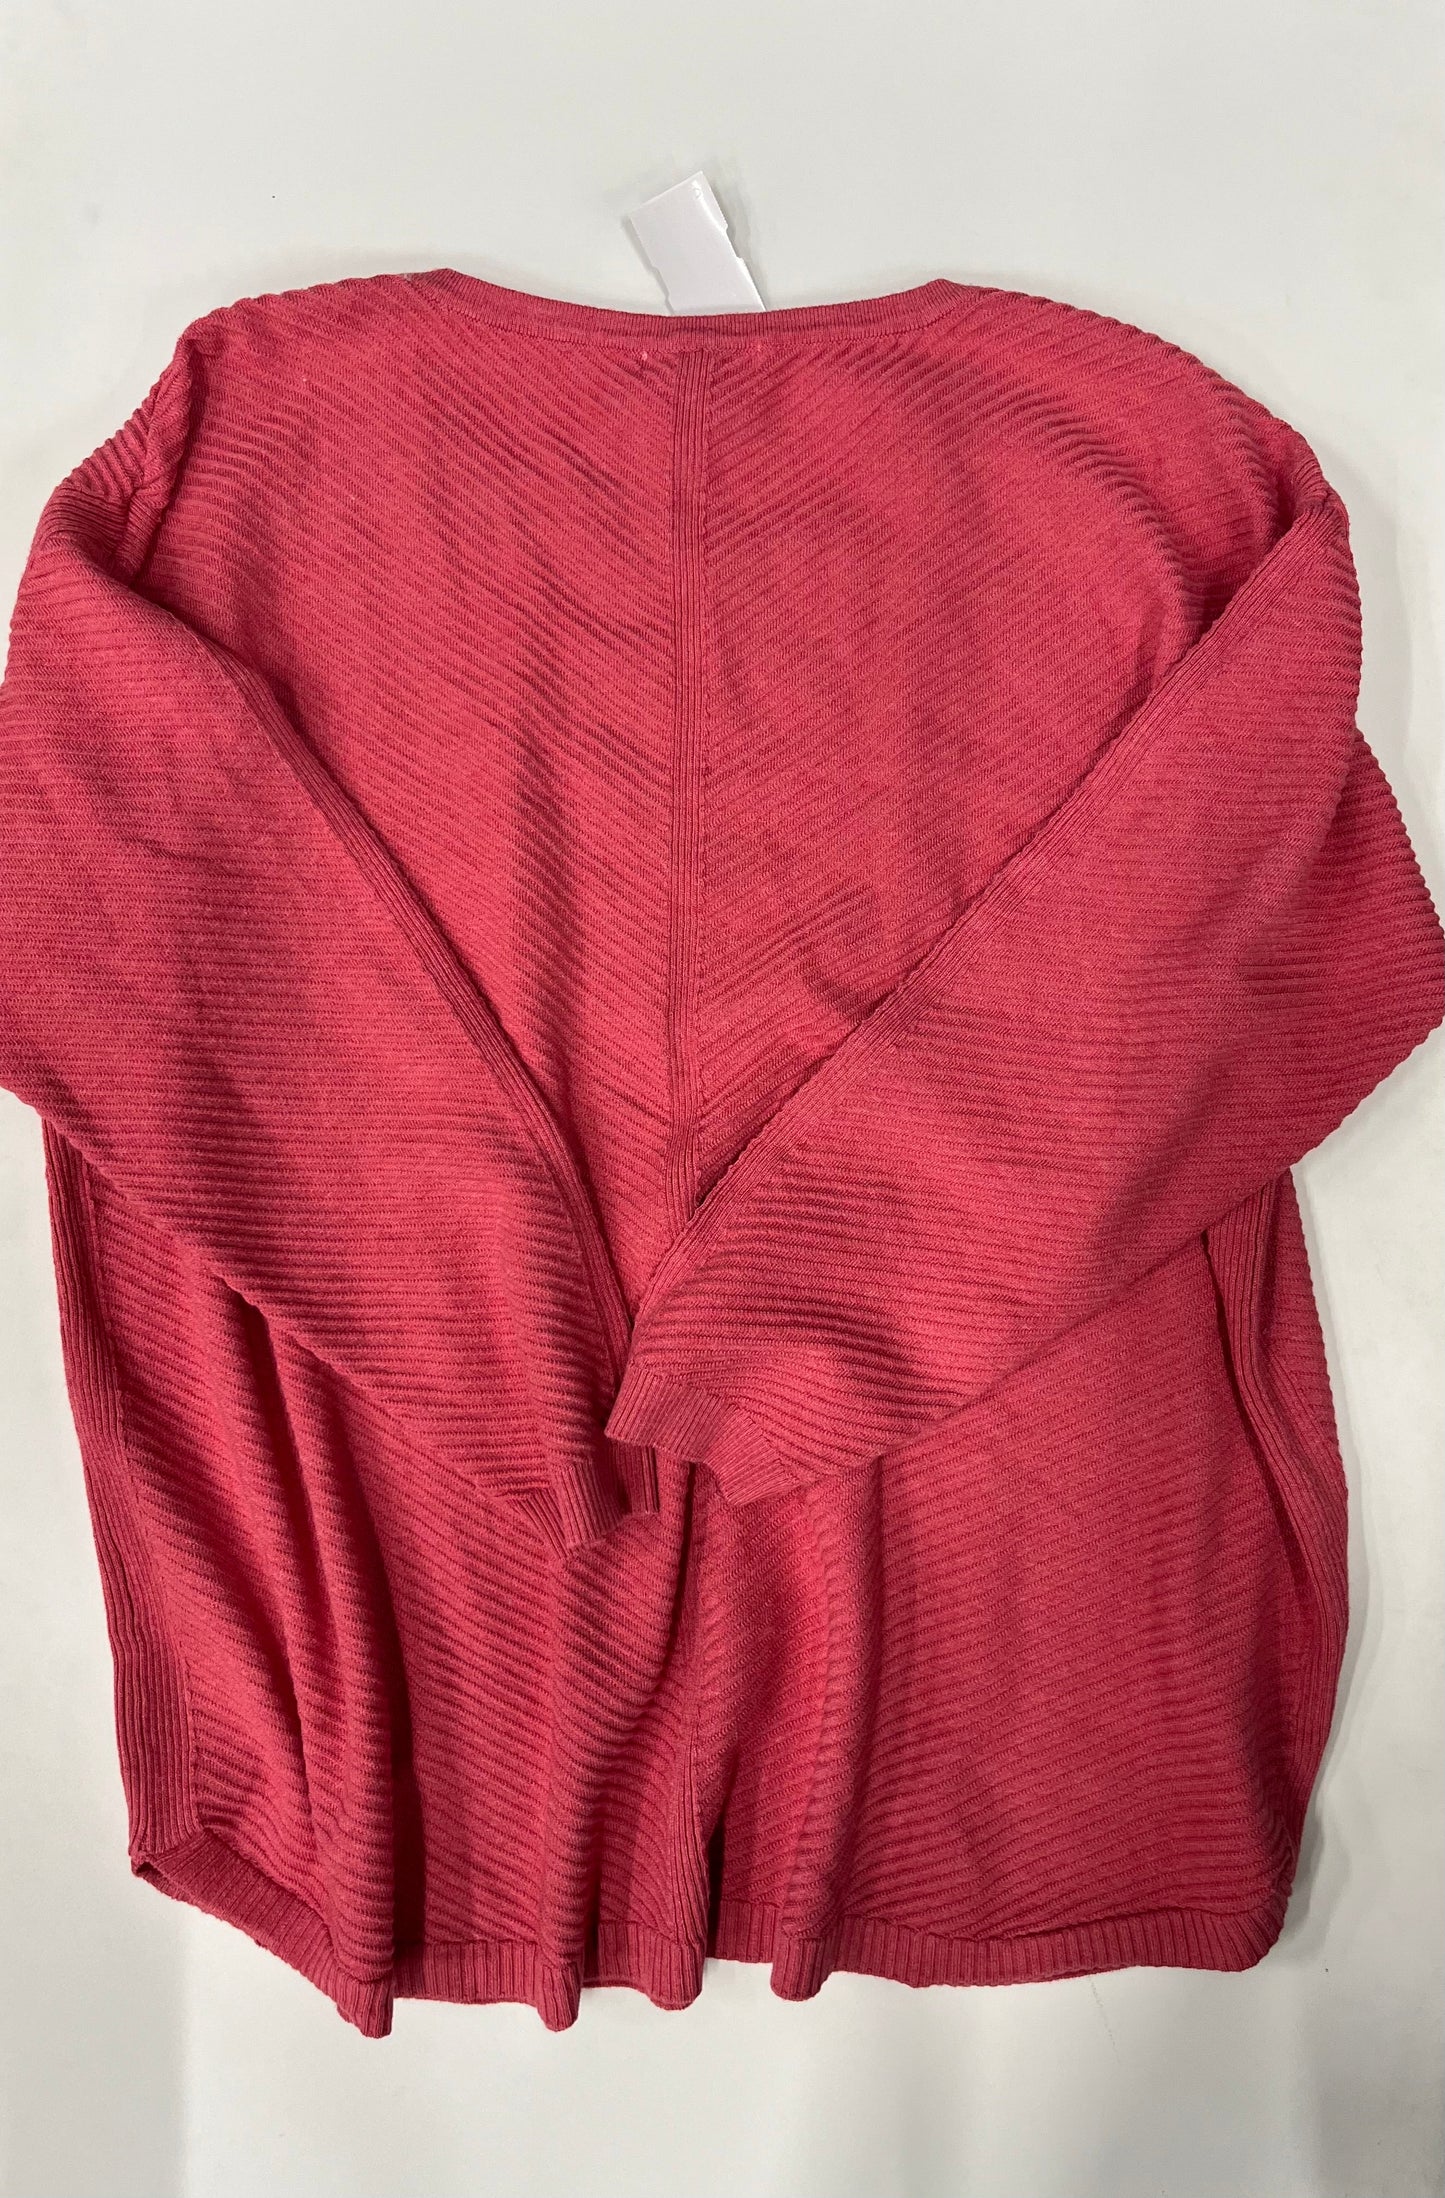 Sweater By Retrology NWT  Size: 3x